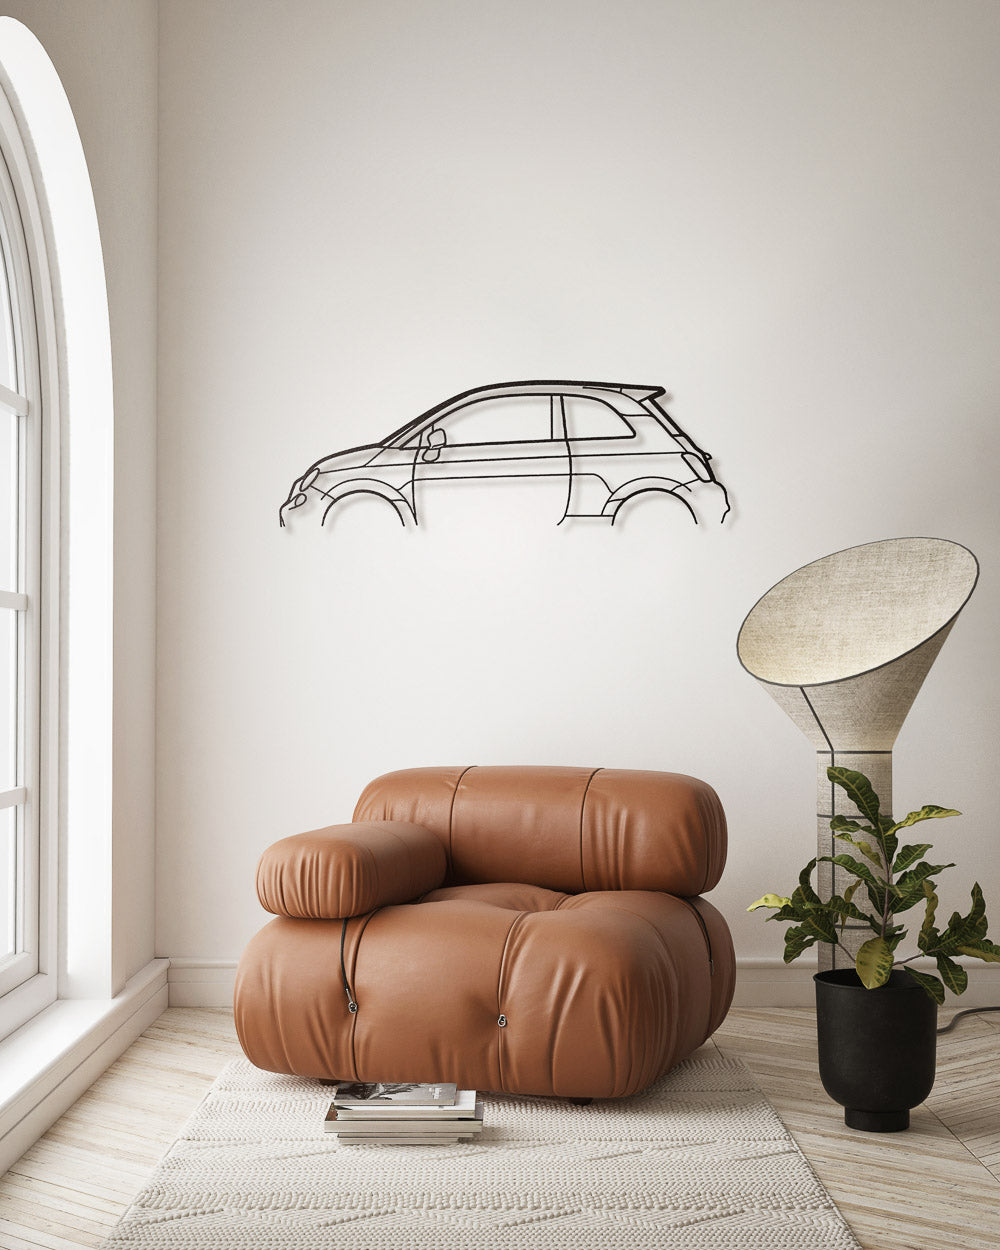 Nos - Fiat 500 Abarth - Sagoma in Metallo di Design